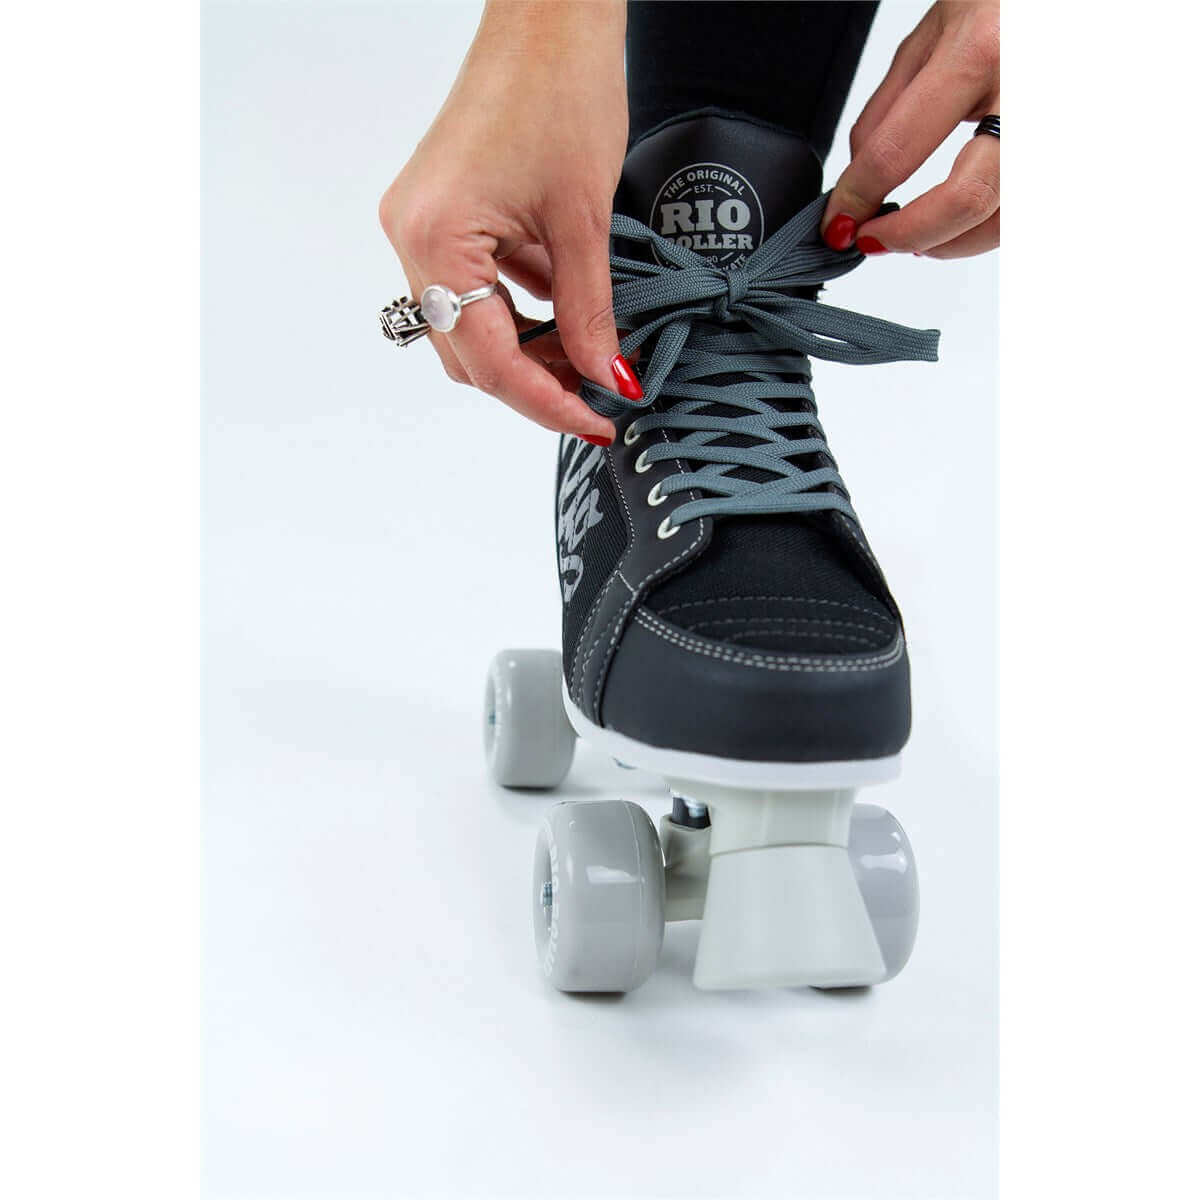 Rio Roller Lumina Black/Grey Quad Skates